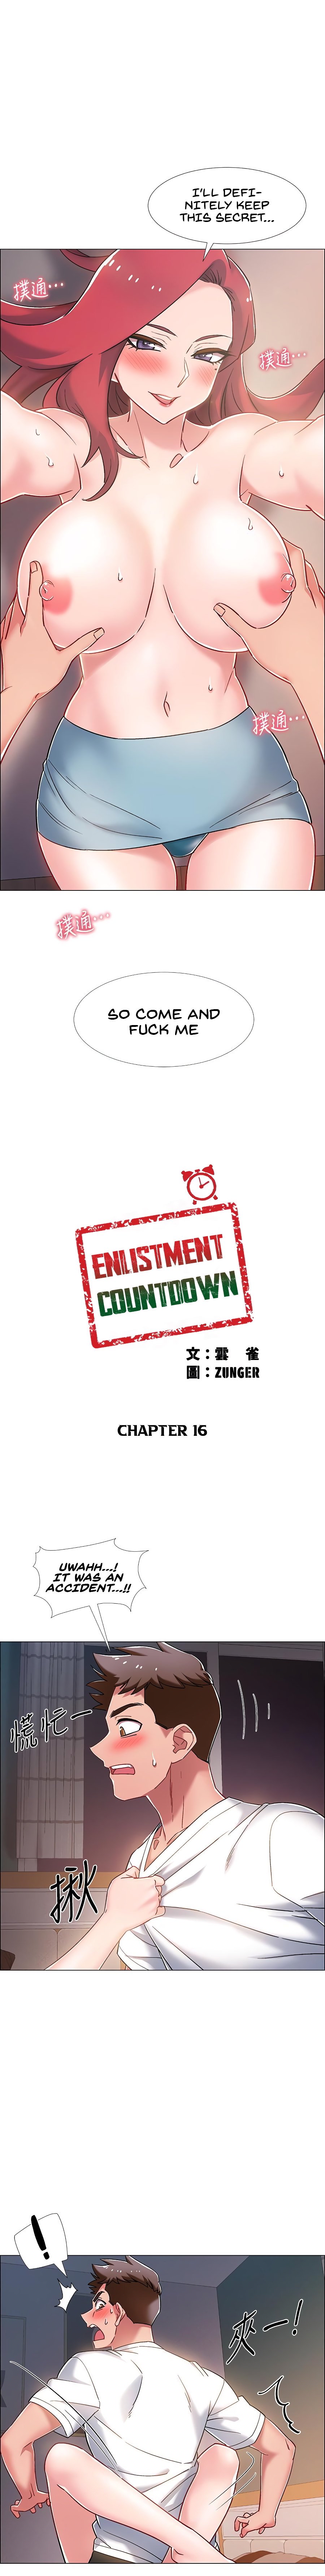 enlistment-countdown-chap-16-1